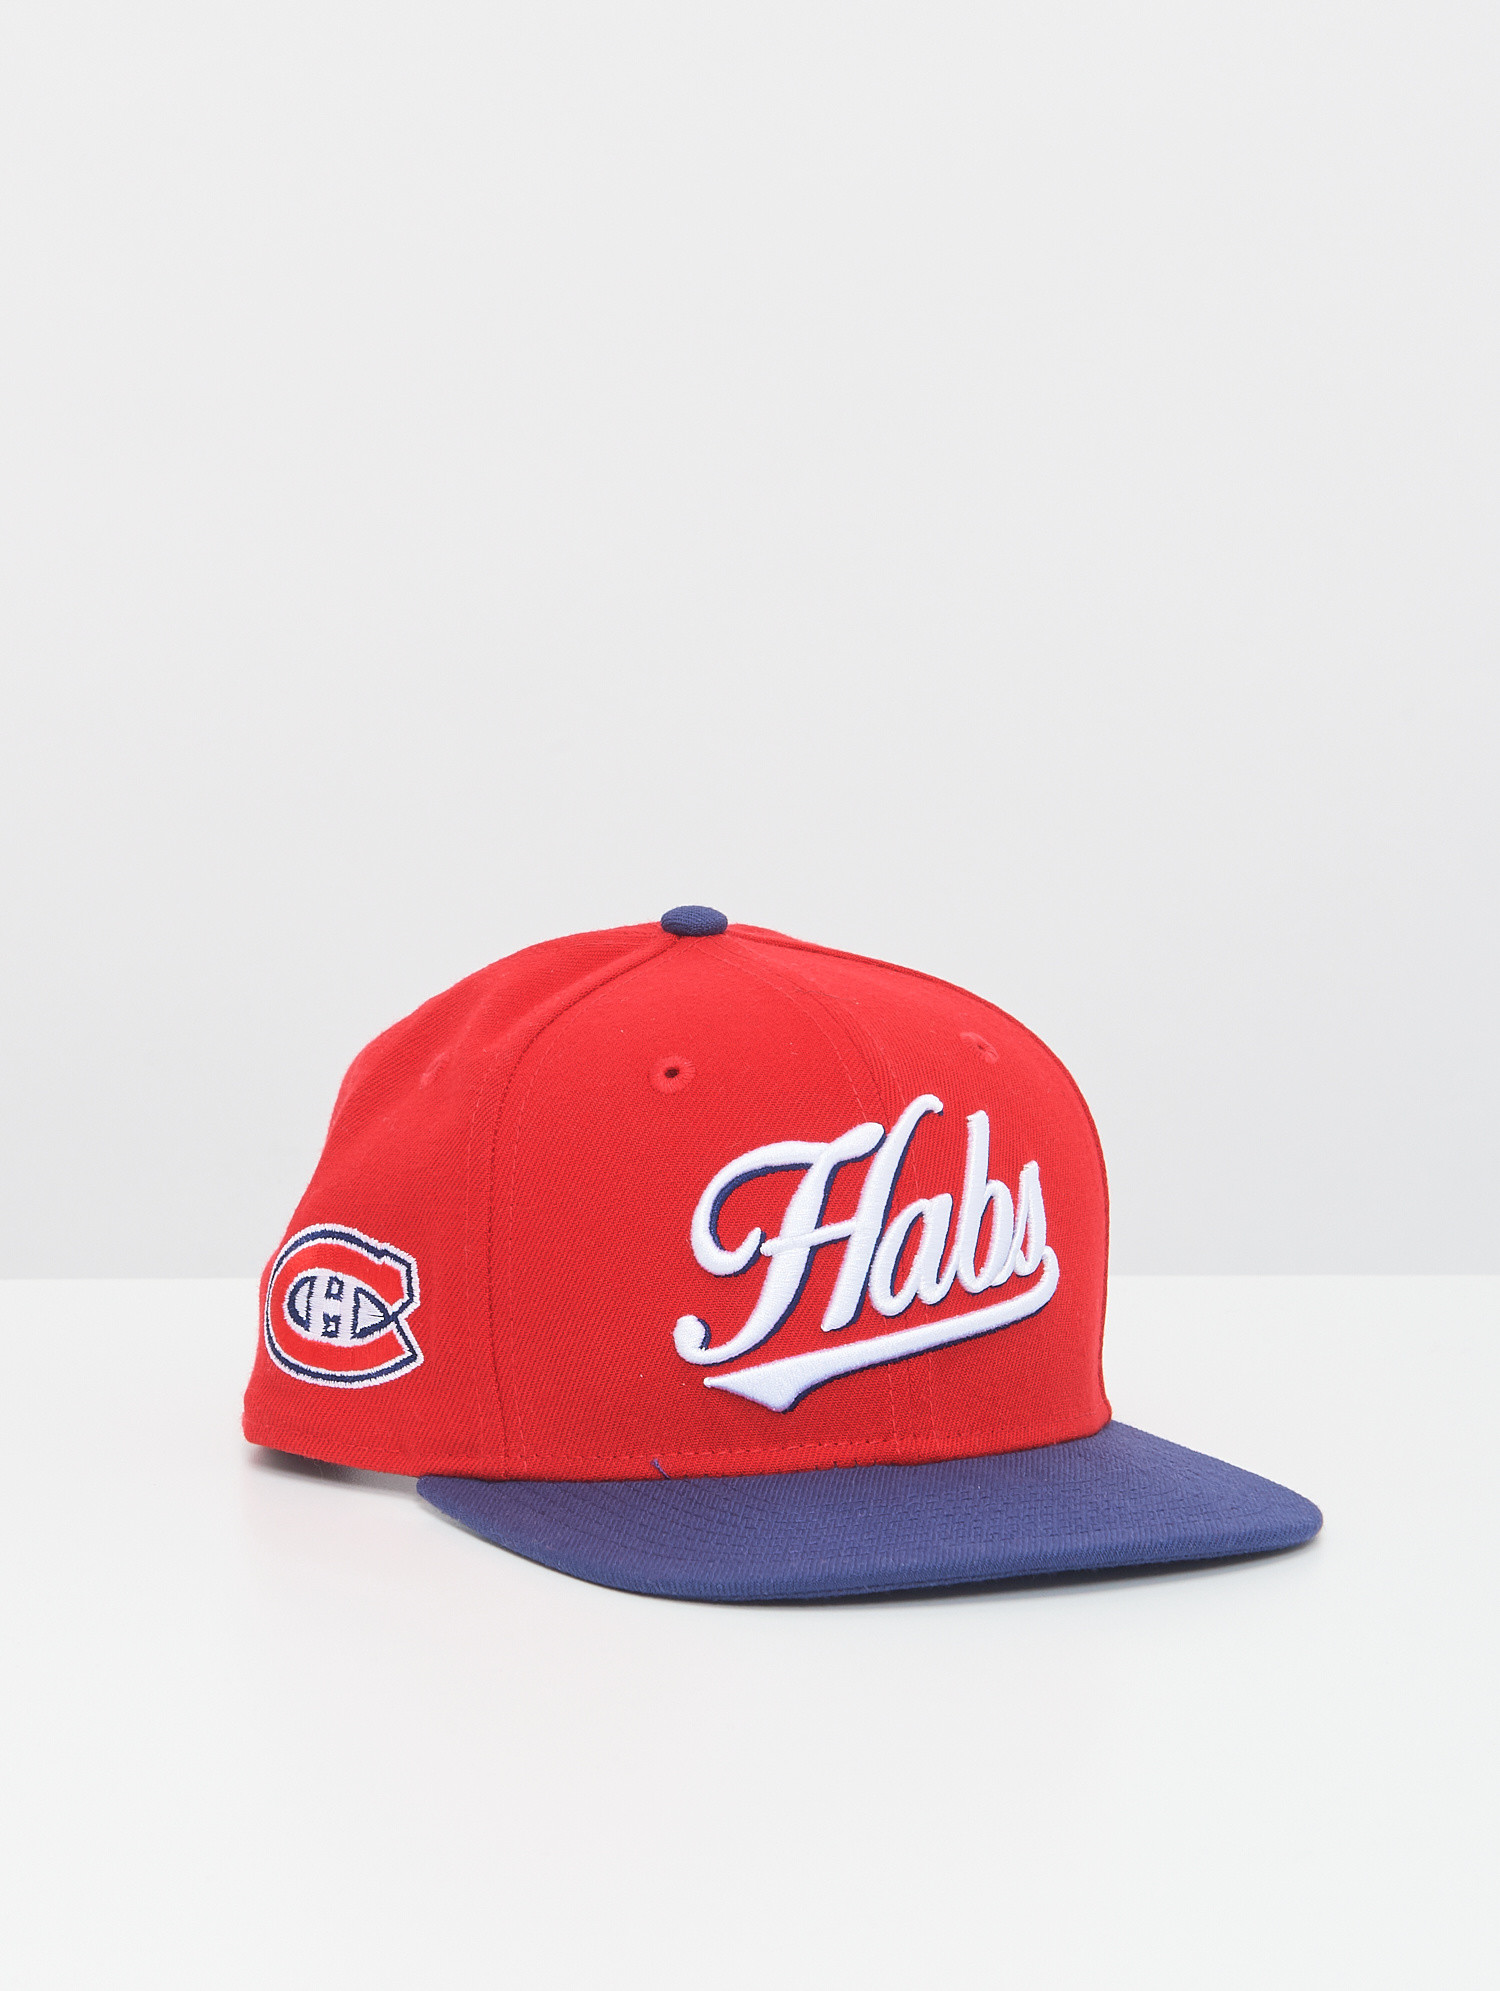 habs hat